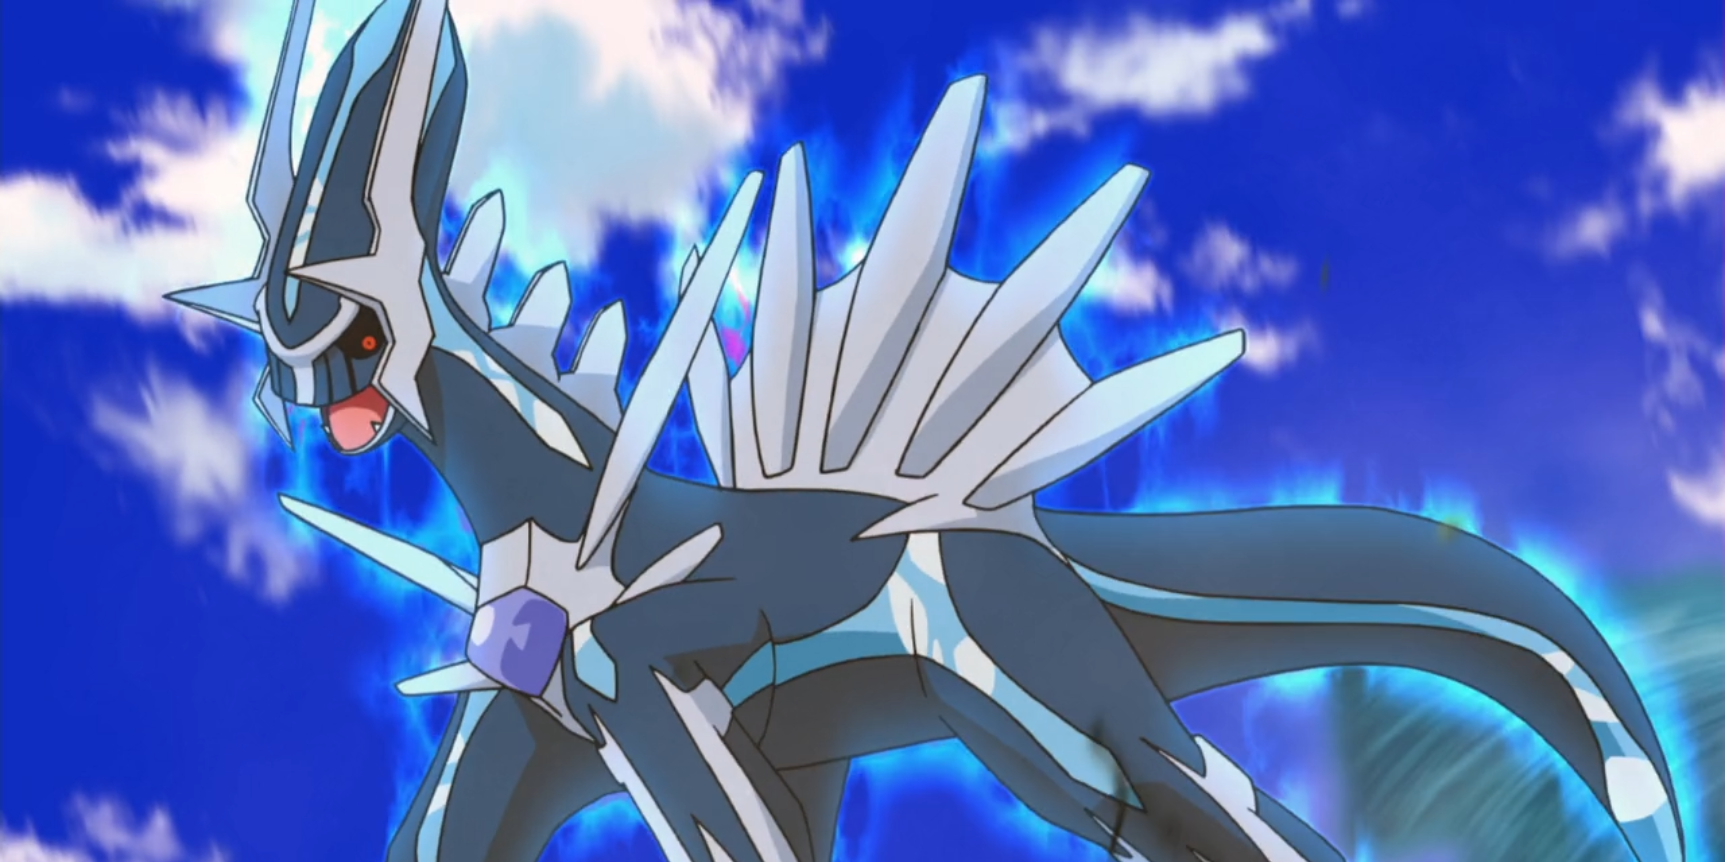 Dialga floating surrounded by blue light in the Pokémon anime